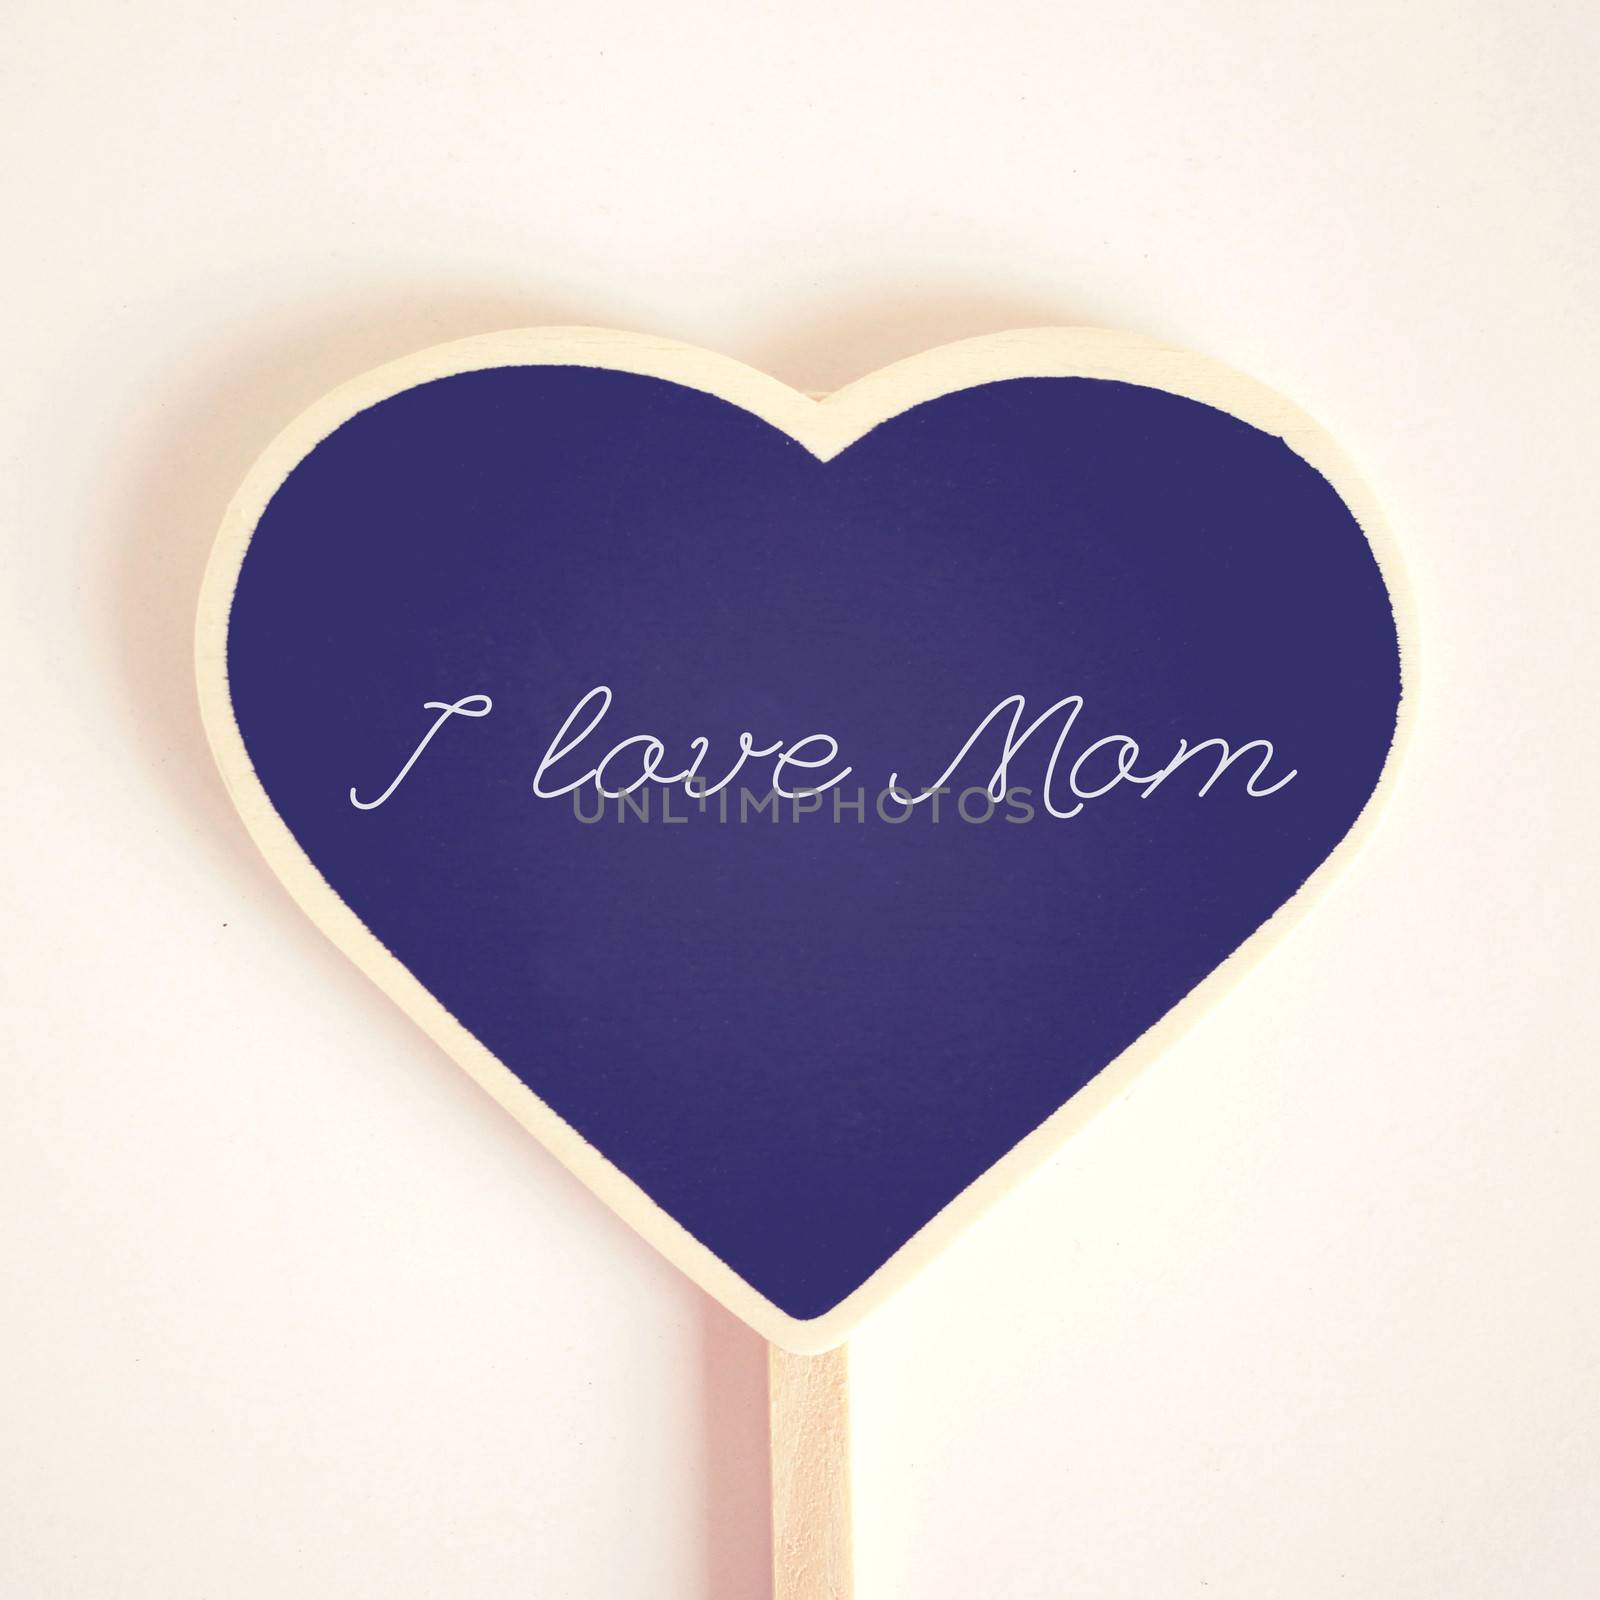 I love mom word on heart shaped blackboard, retro filter effect  by nuchylee